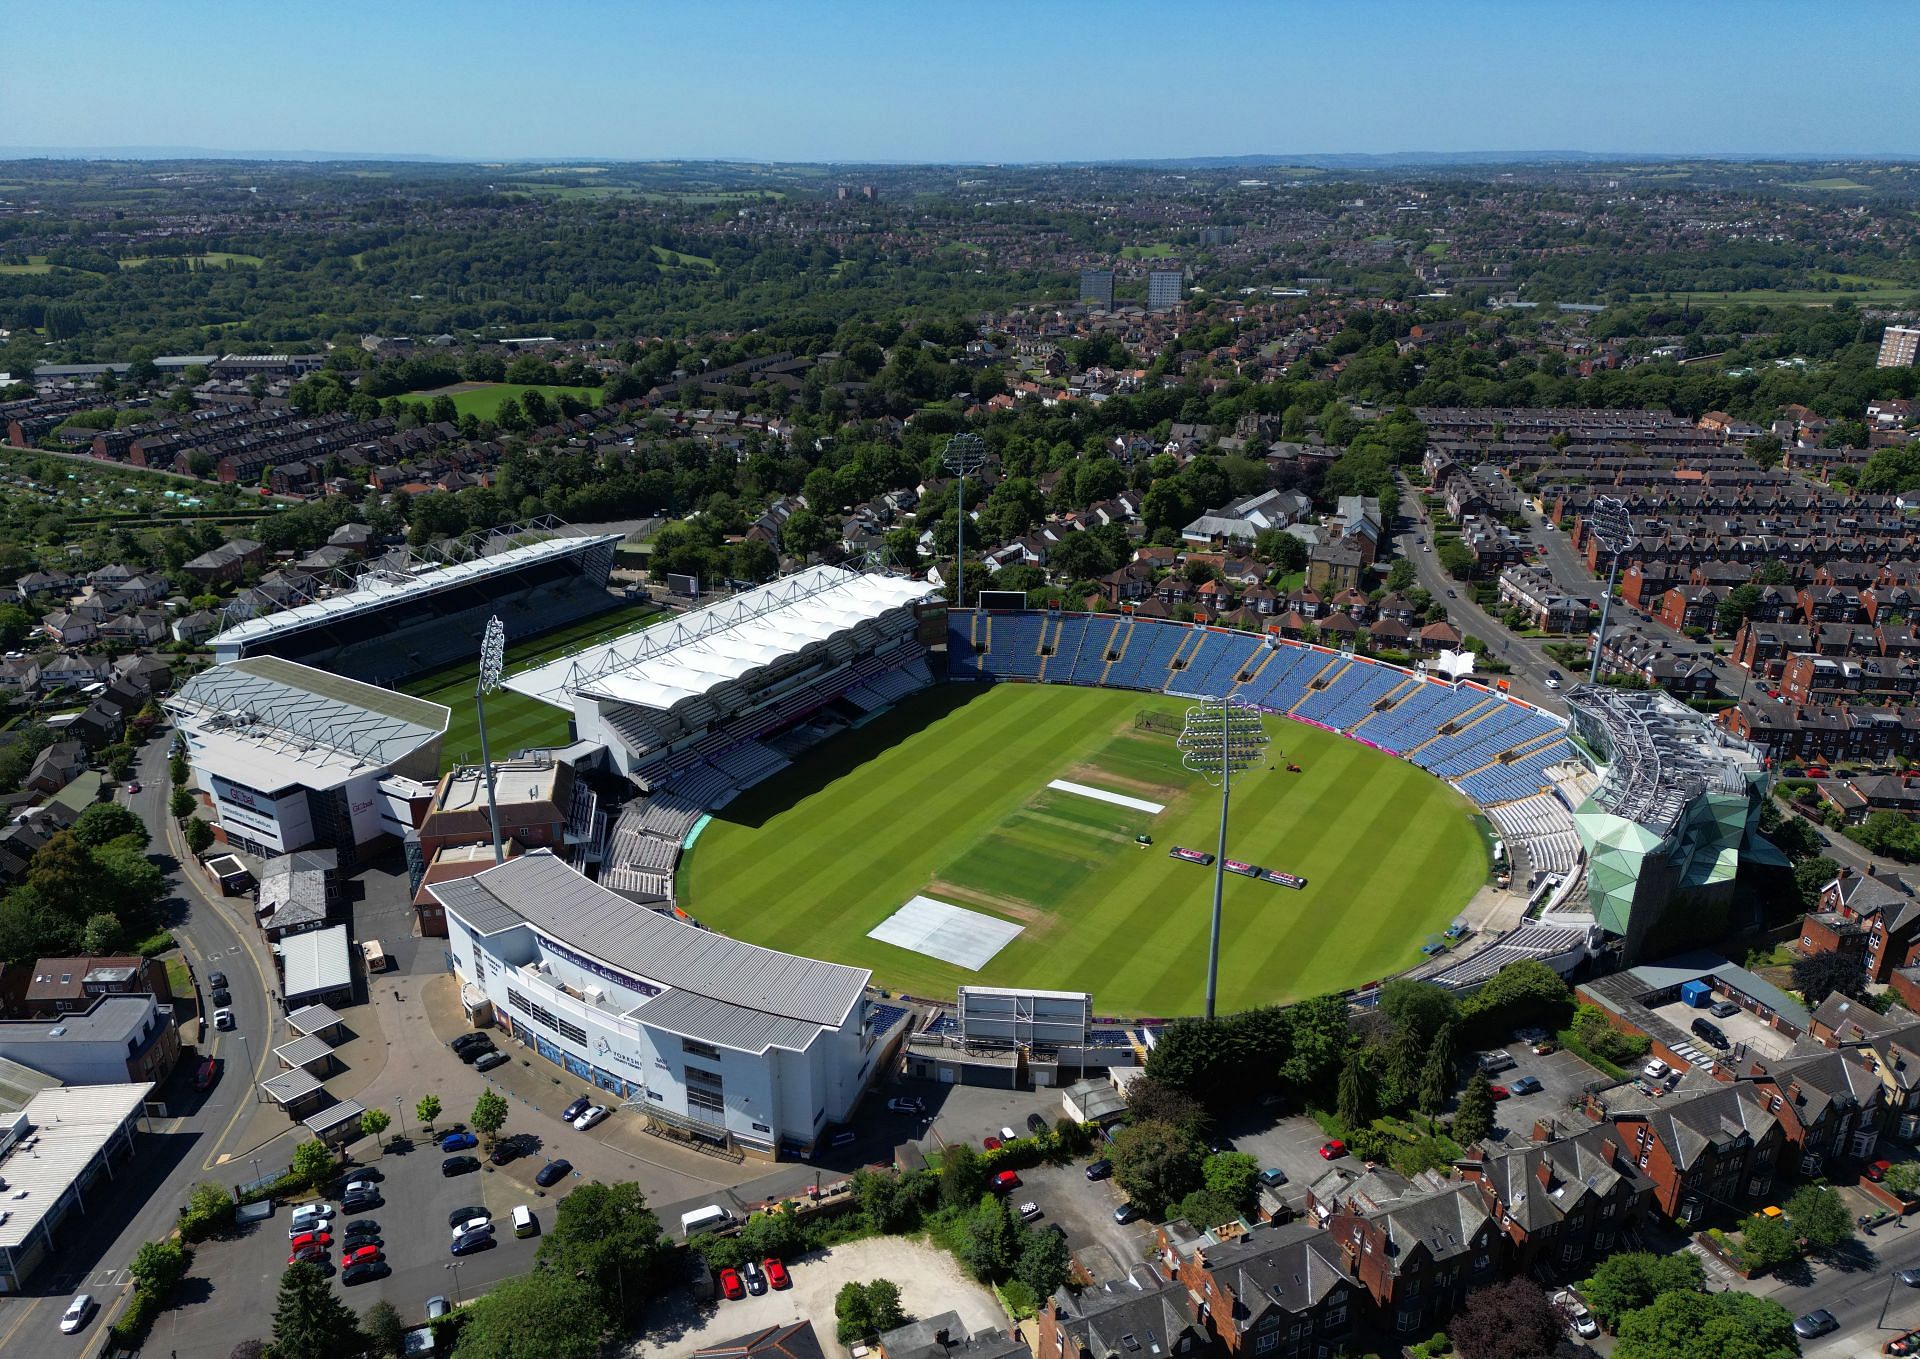 General Views Of Headingley Stadium